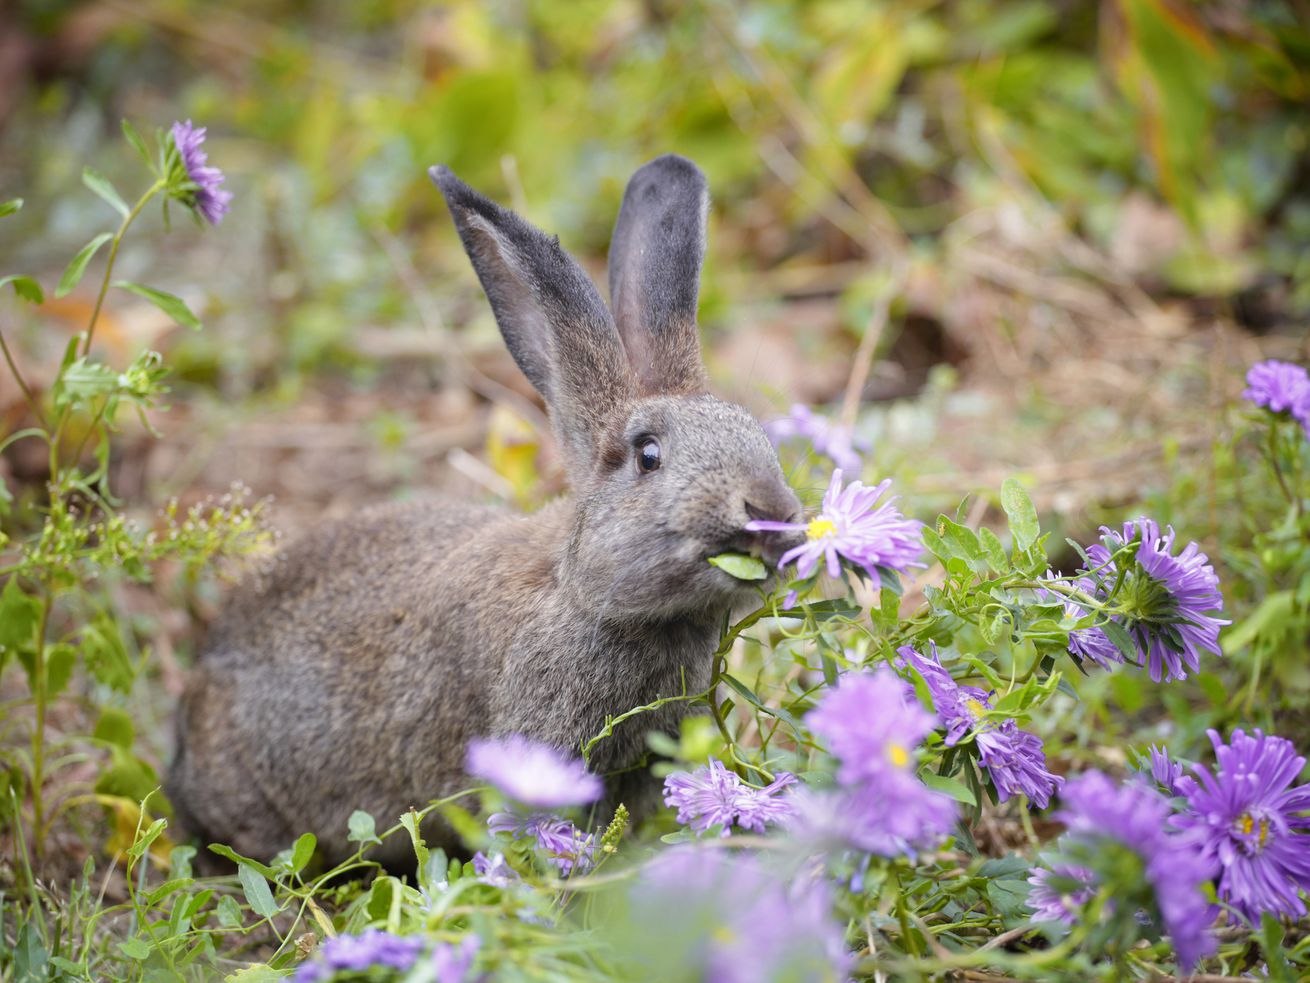 Small gray rabbit eating garden flowers.